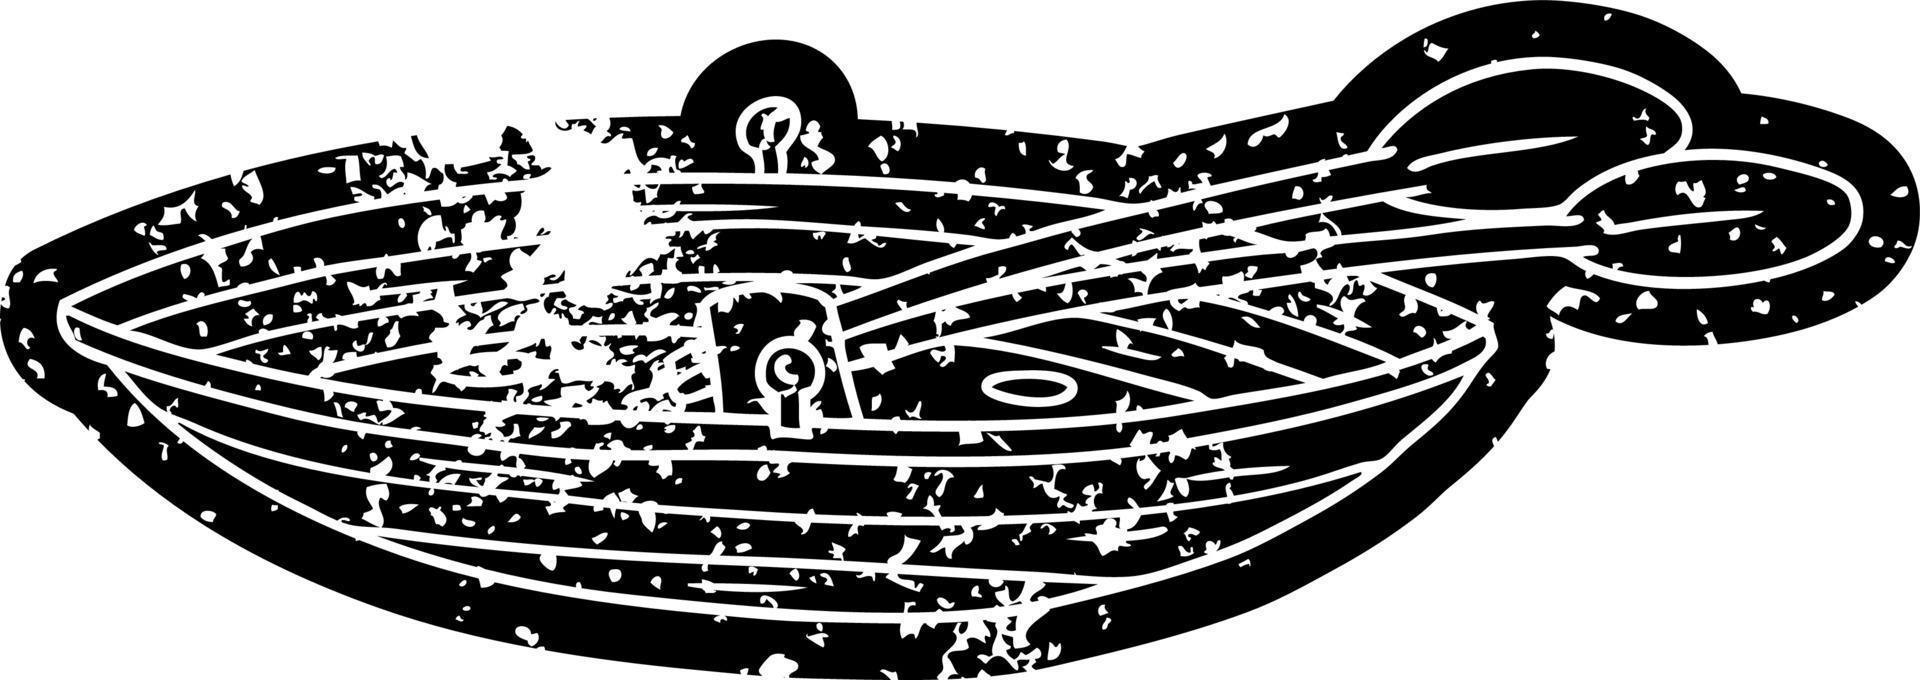 icono grunge dibujo de un barco de madera vector